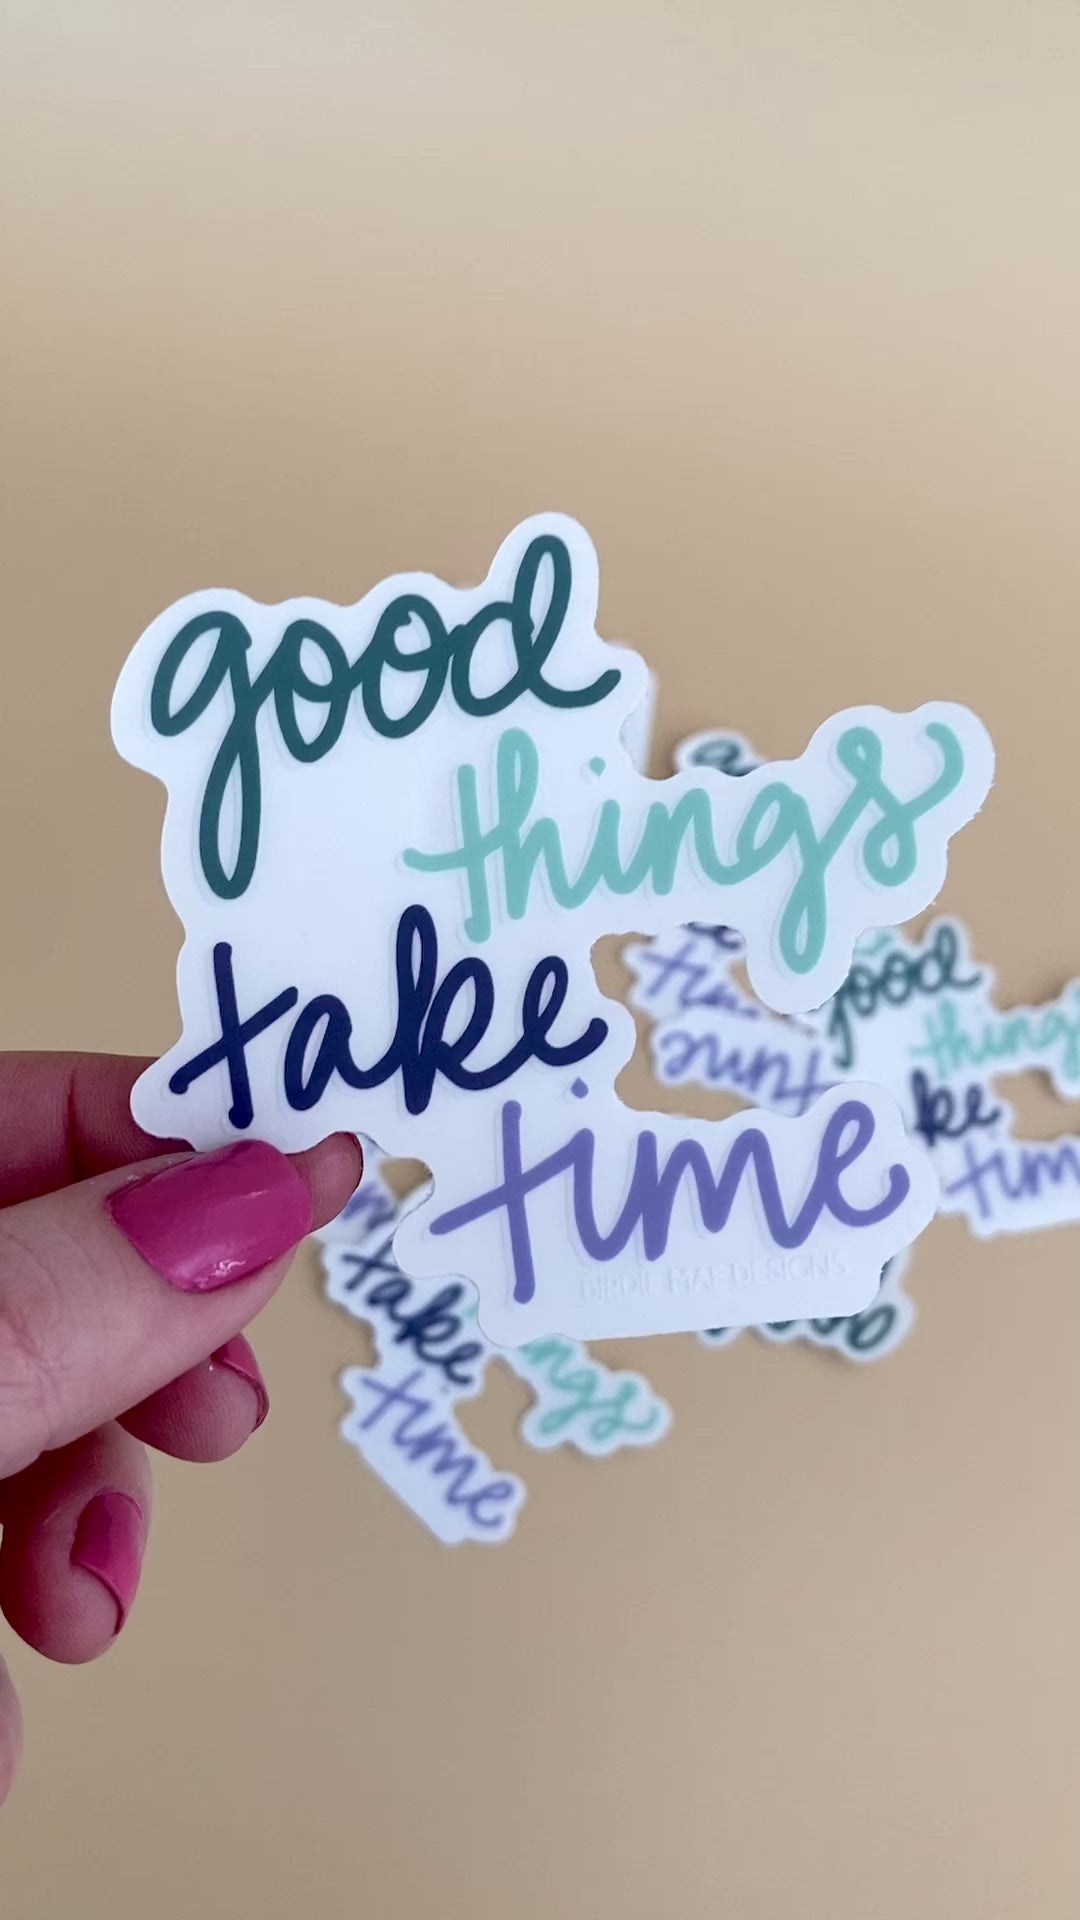 good things take time sticker, inspirational sticker, motivational sticker, sticker, vinyl sticker